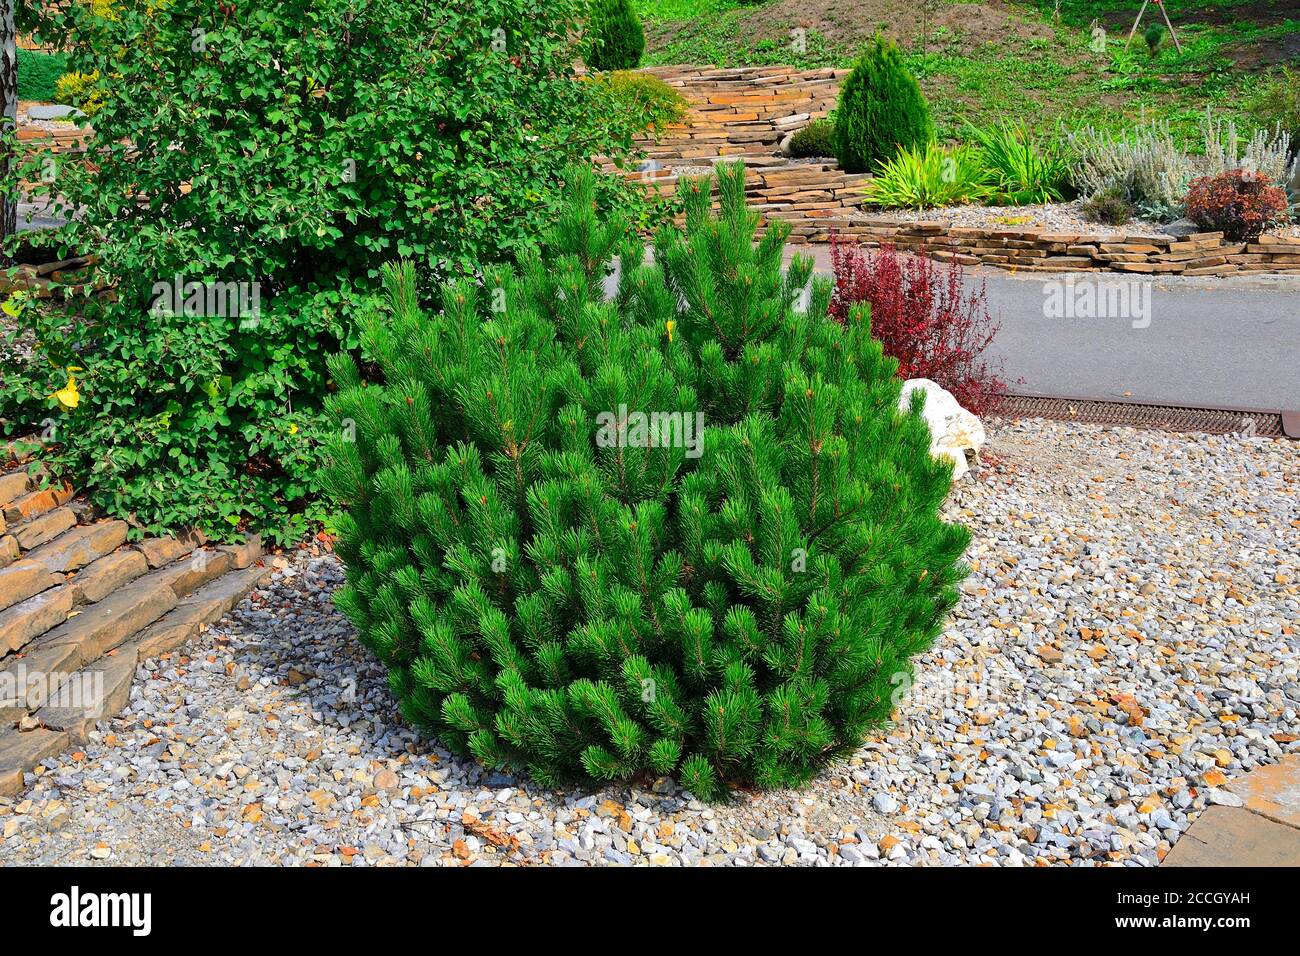 Dwarf mountain pine tree - decorative undersize evergreen coniferous plant in rocky garden. Ornamental shrub for gardening or landscape design of alpi Stock Photo